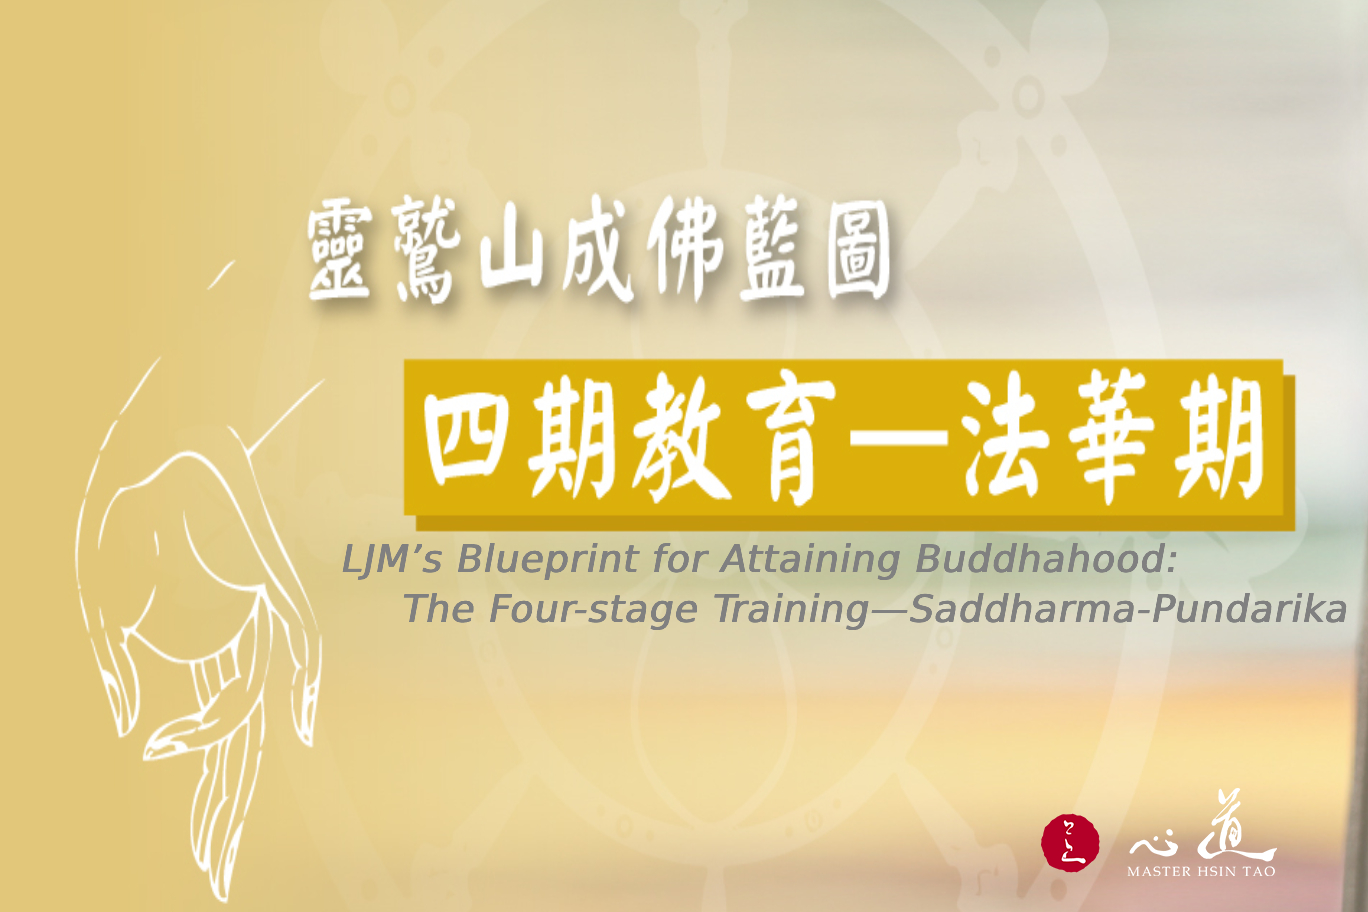 LJM’s Blueprint for Attaining Buddhahood: The Four-stage Training—Saddharma-Pundarika  - MasterHsinTao